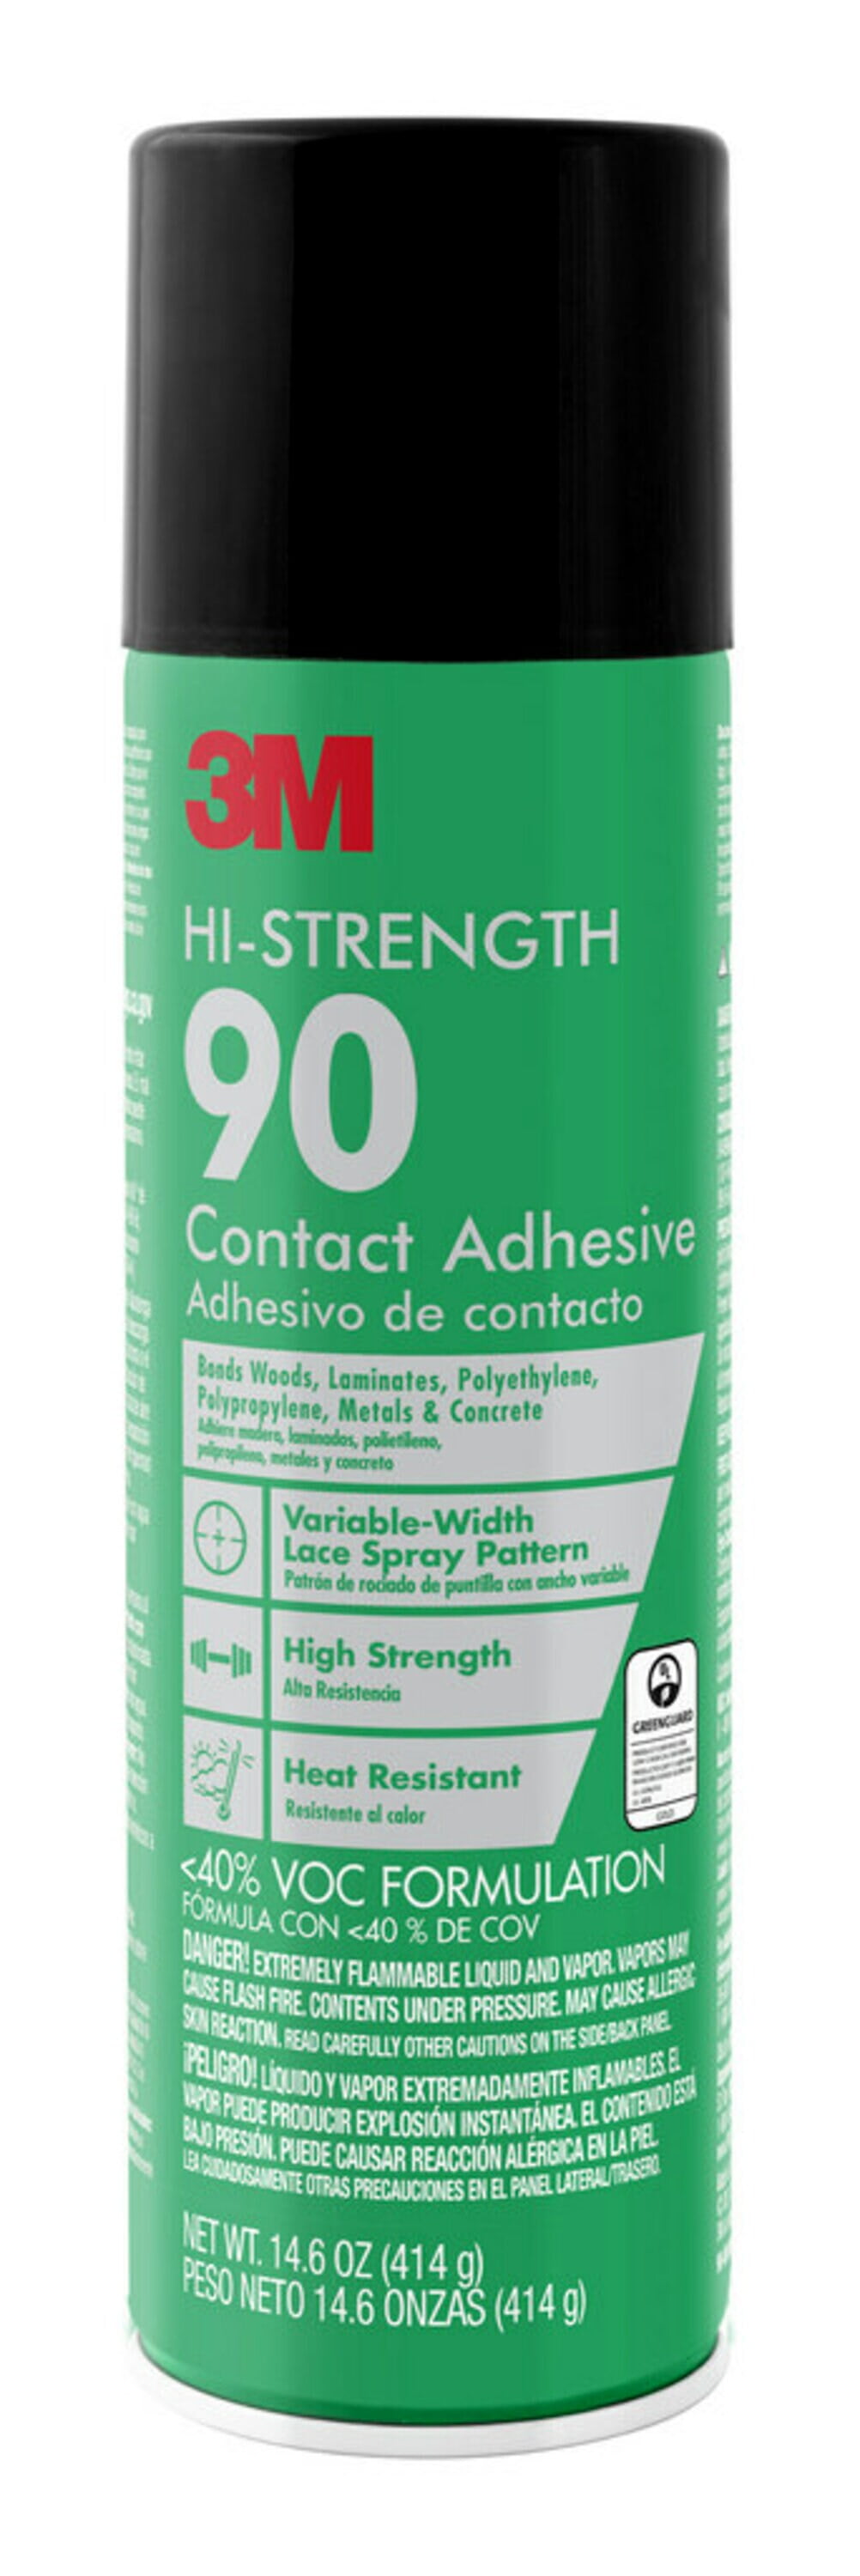 3M Hi-Strength 90 Contact Adhesive, Low VOC, 14.6 oz